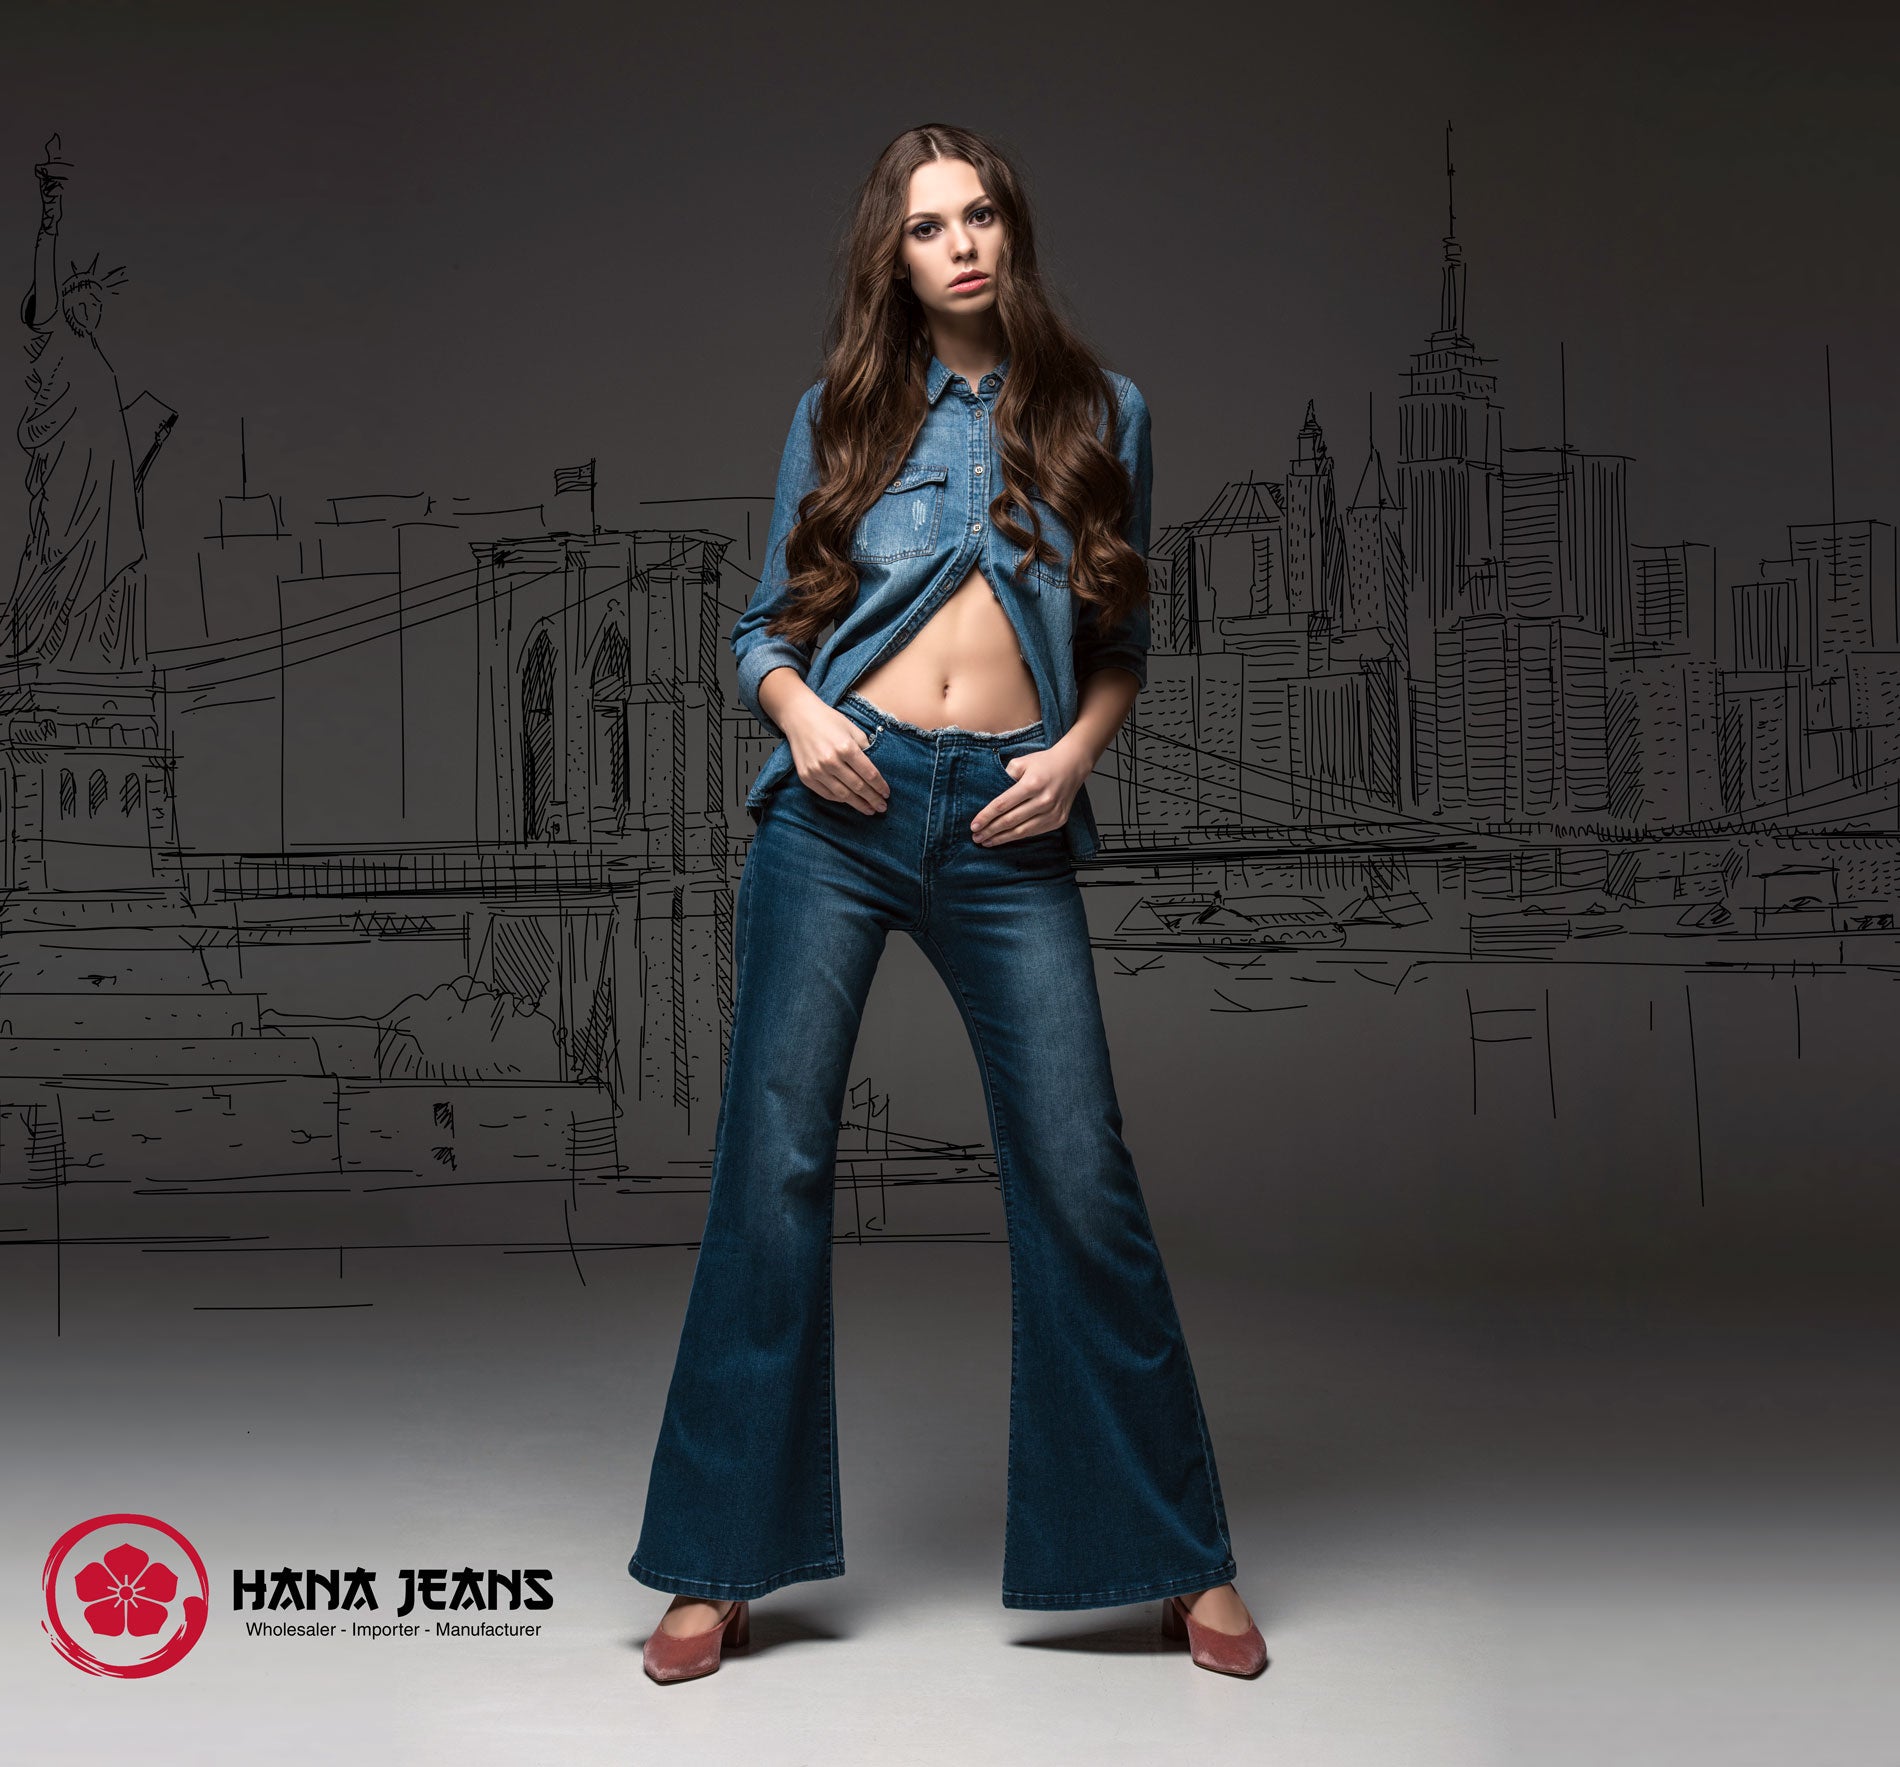 Flared Jeans - The Vintage Vibe of Denim.